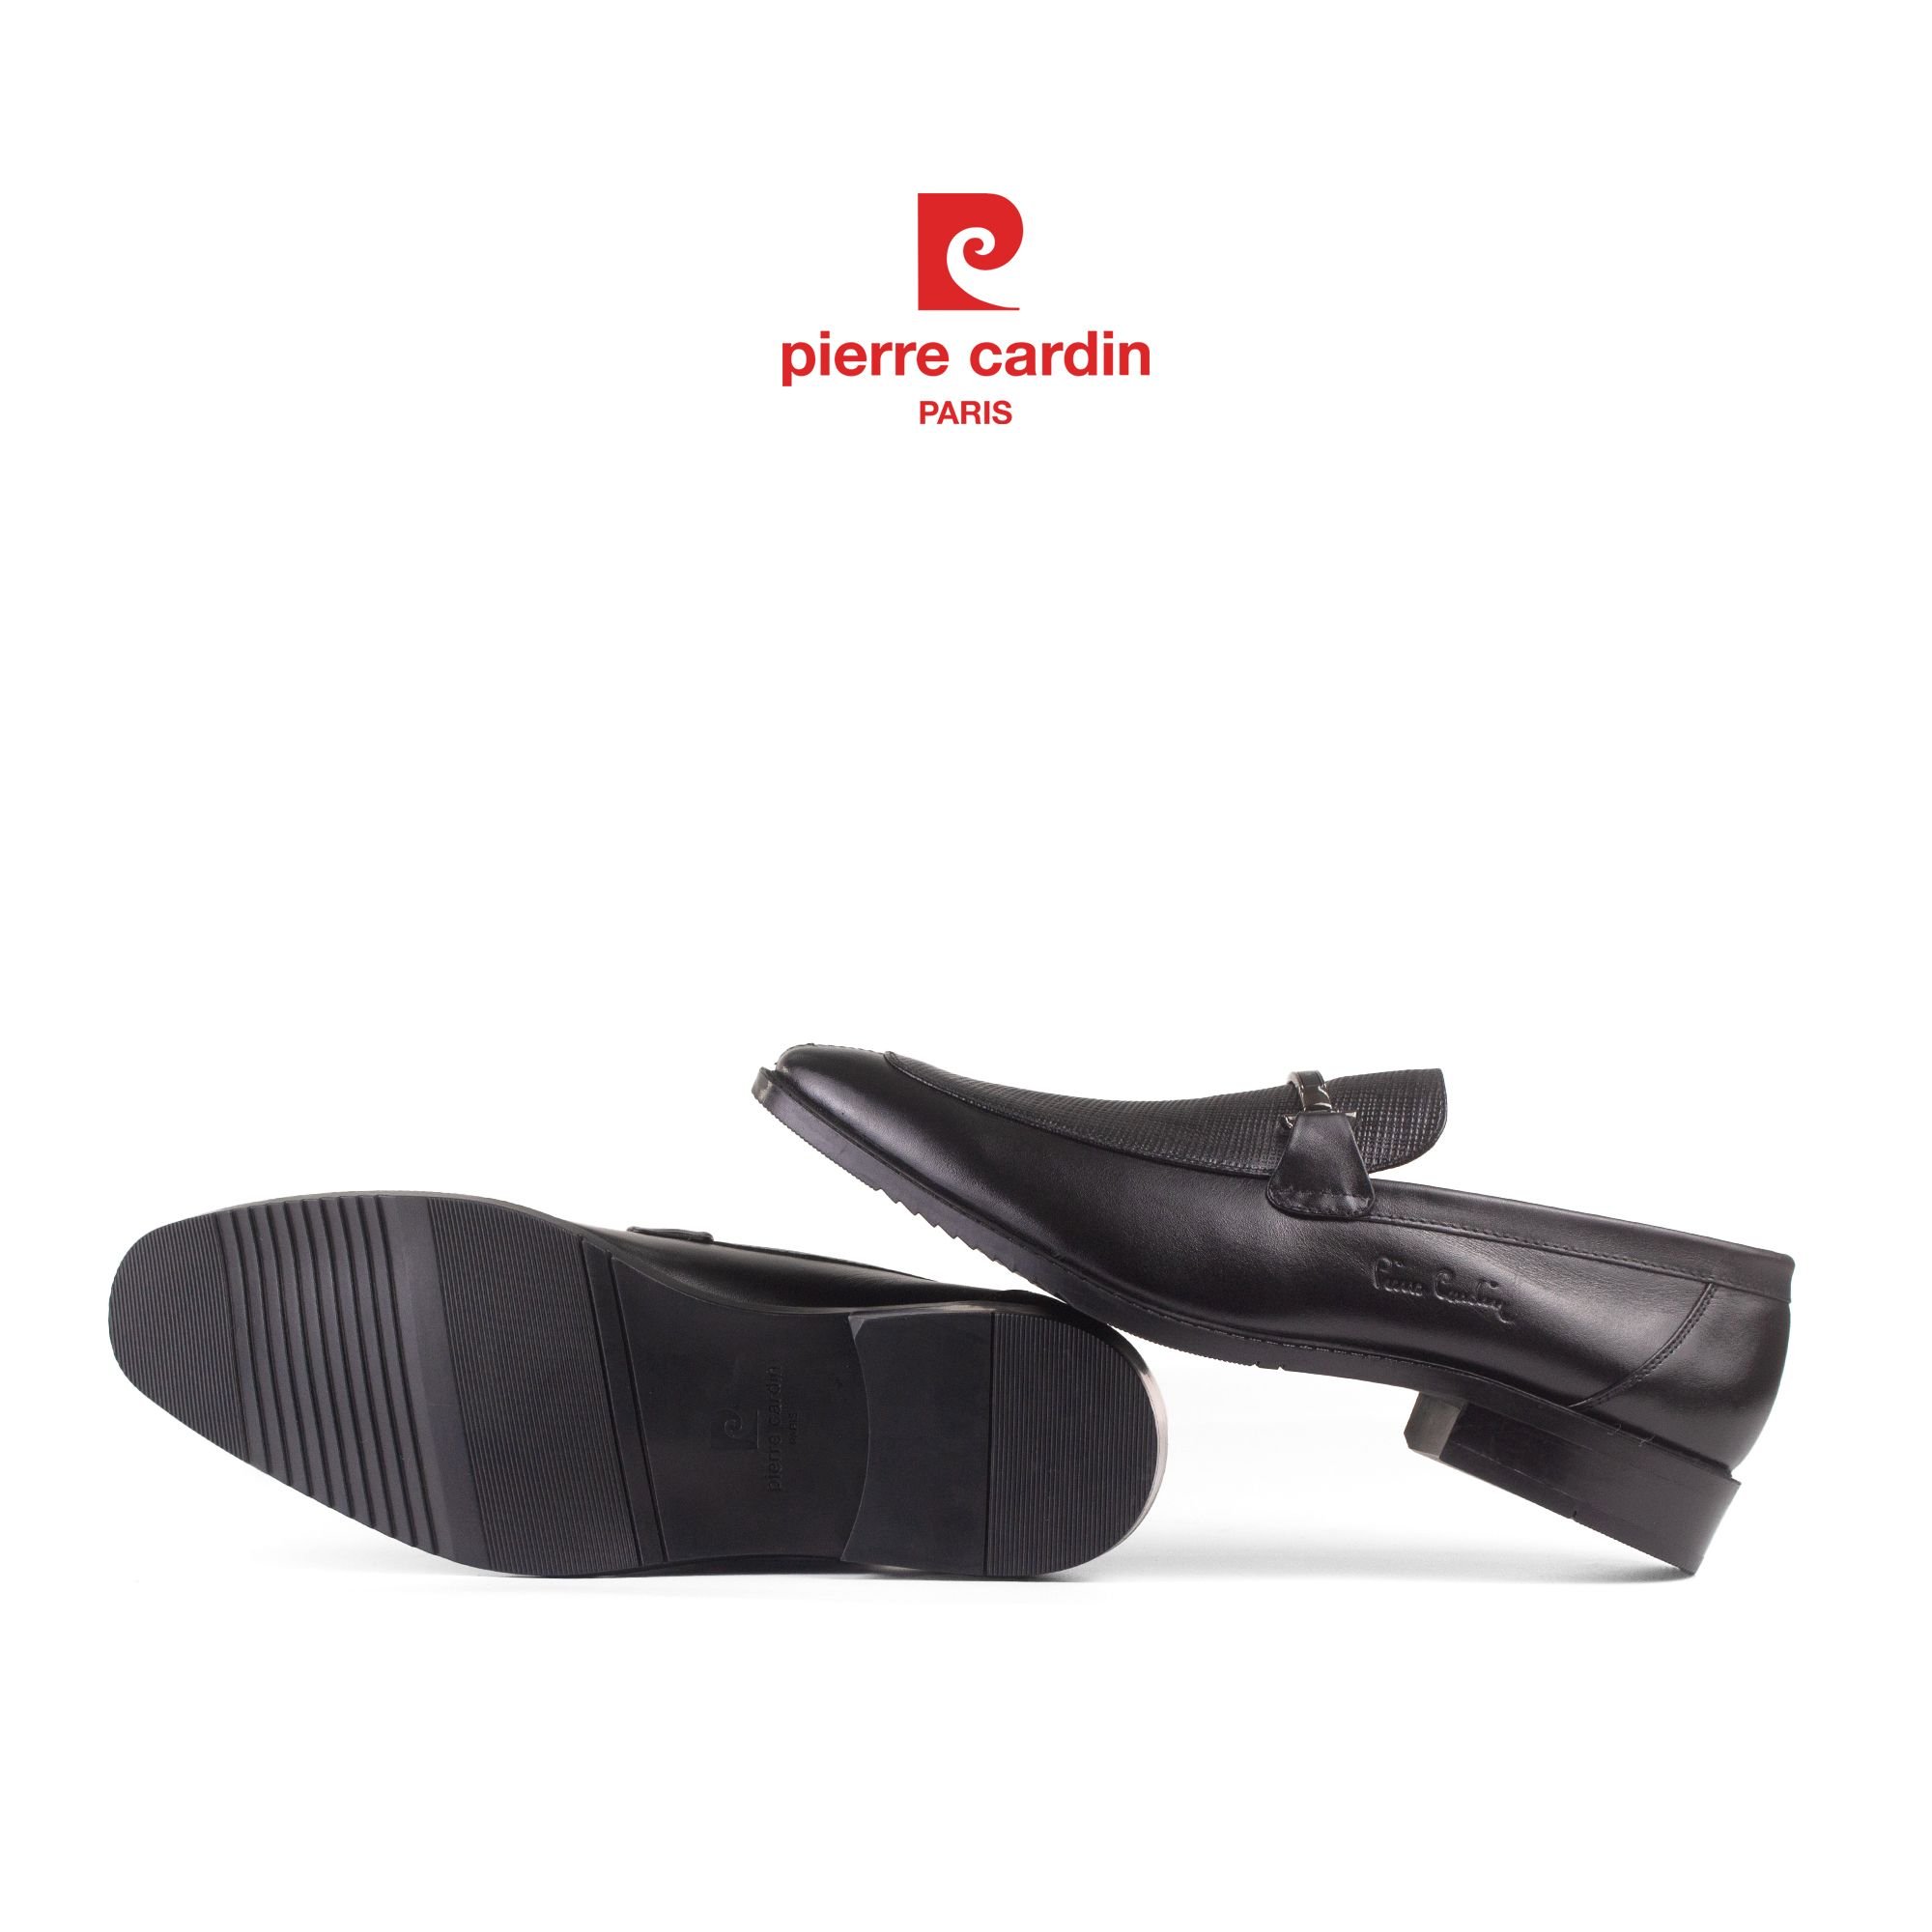 Pierre Cadin Paris Vietnam: Giày Horsebit Loafer Pierre Cardin - PCMFWLH 783 (BLACK)